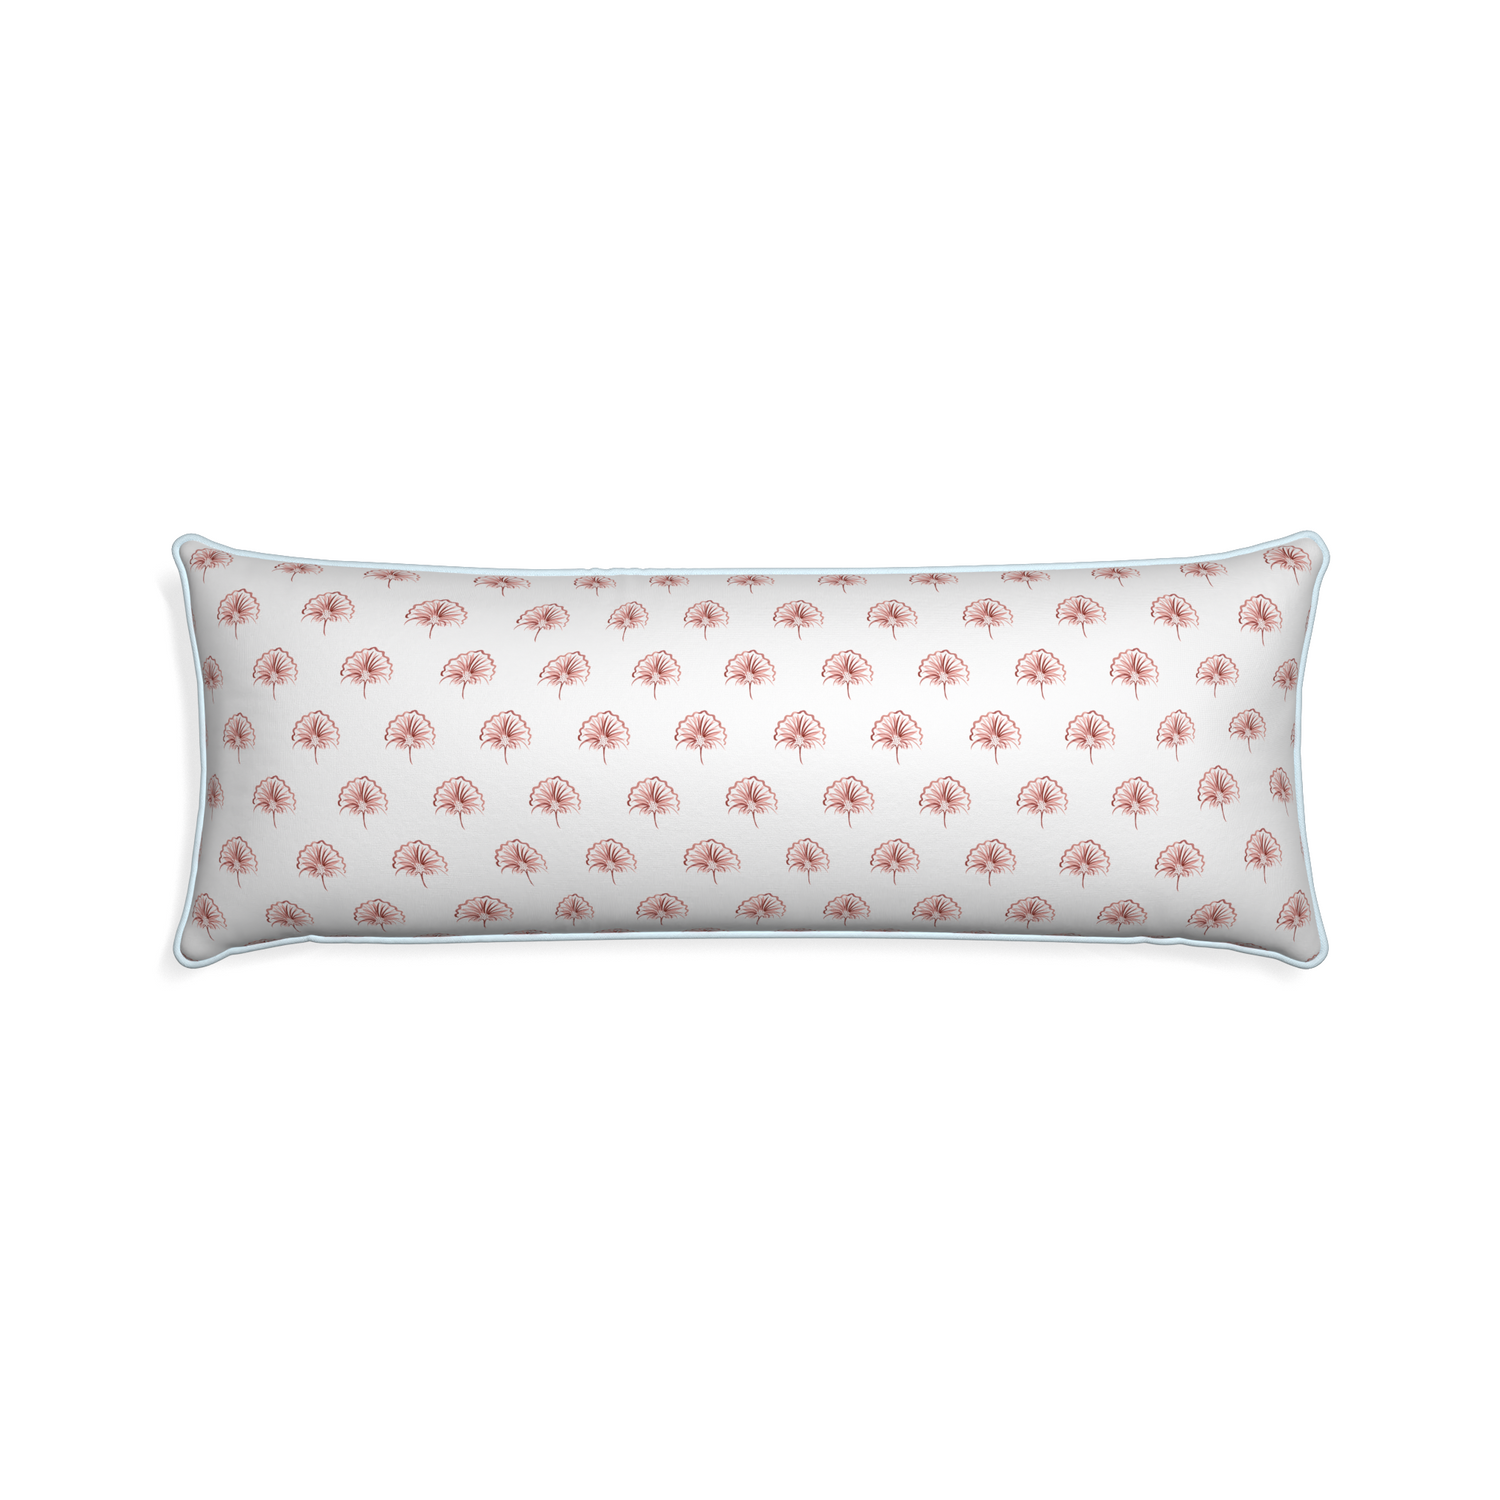 Xl-lumbar penelope rose custom pillow with powder piping on white background